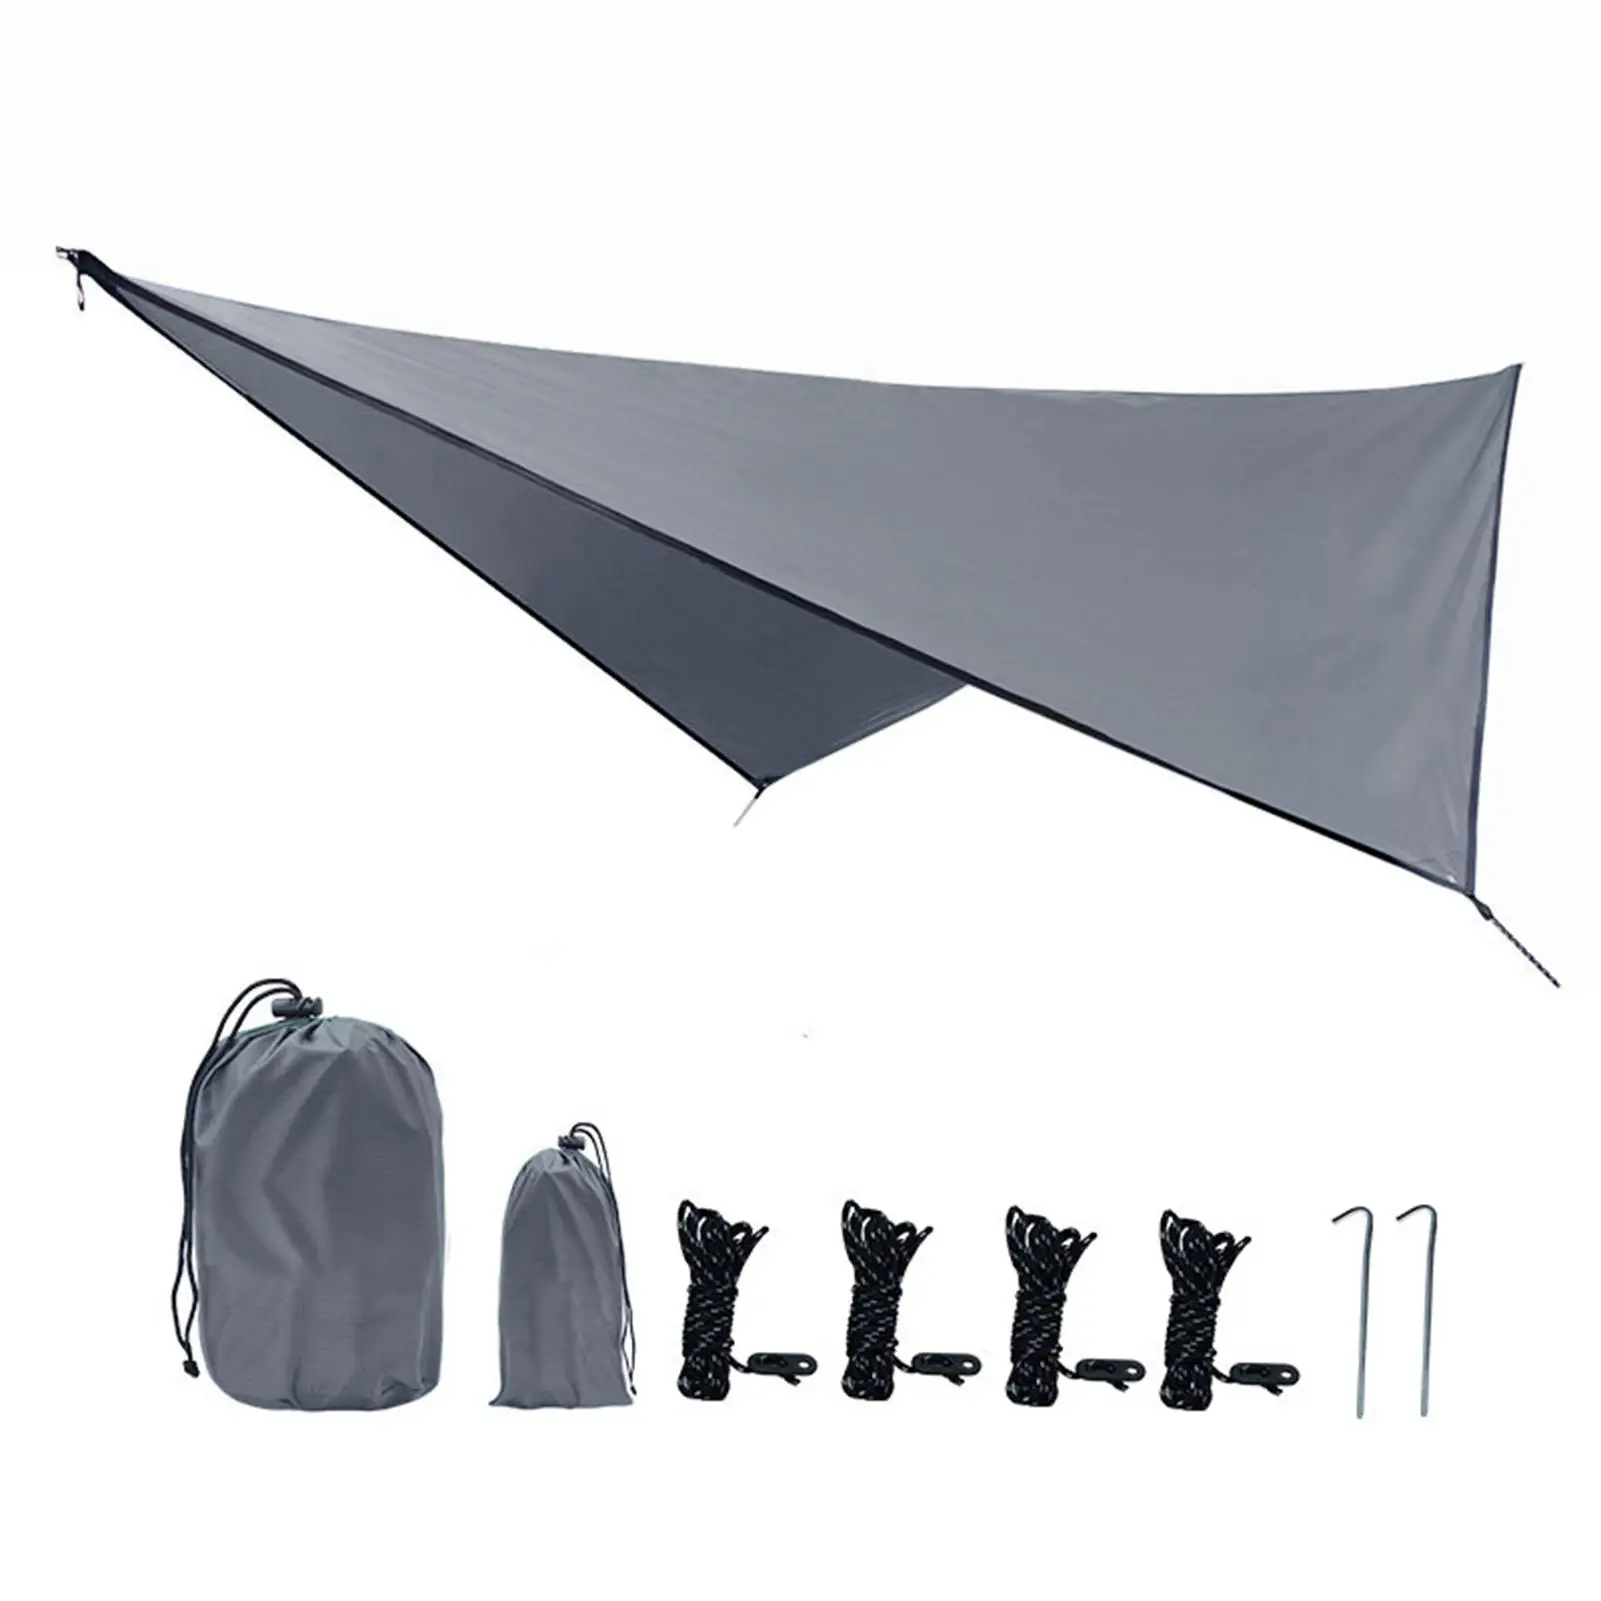 360cm x 290cm Waterproof Tarp Tent Shade Outdoor Camping Hammock Rain Fly UV Garden Awning Canopy Sunshade Ultralight 5 Colors